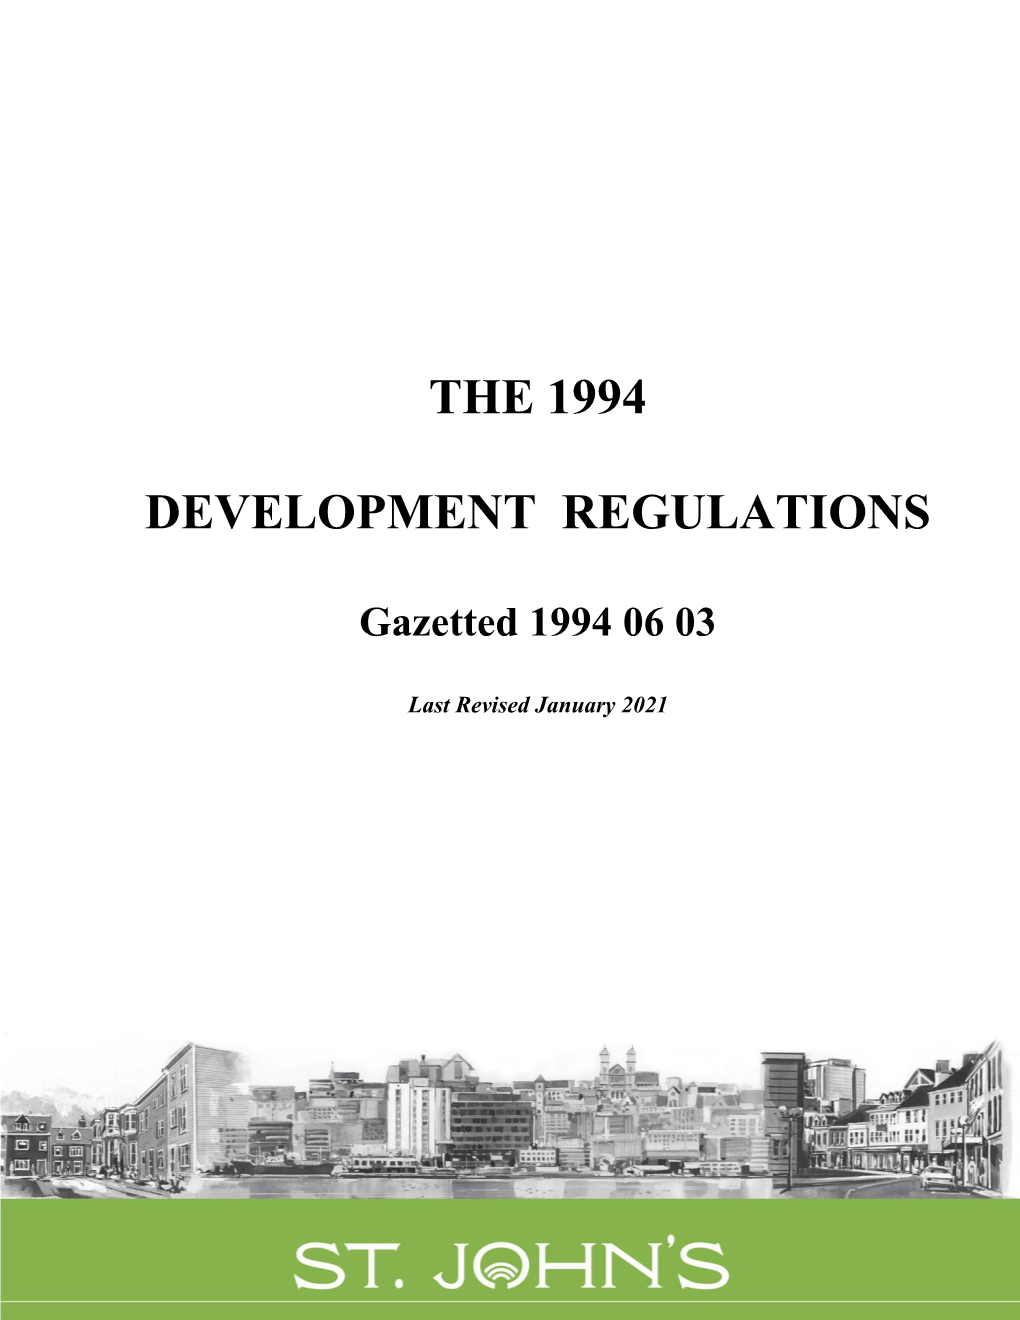 Development Regulations